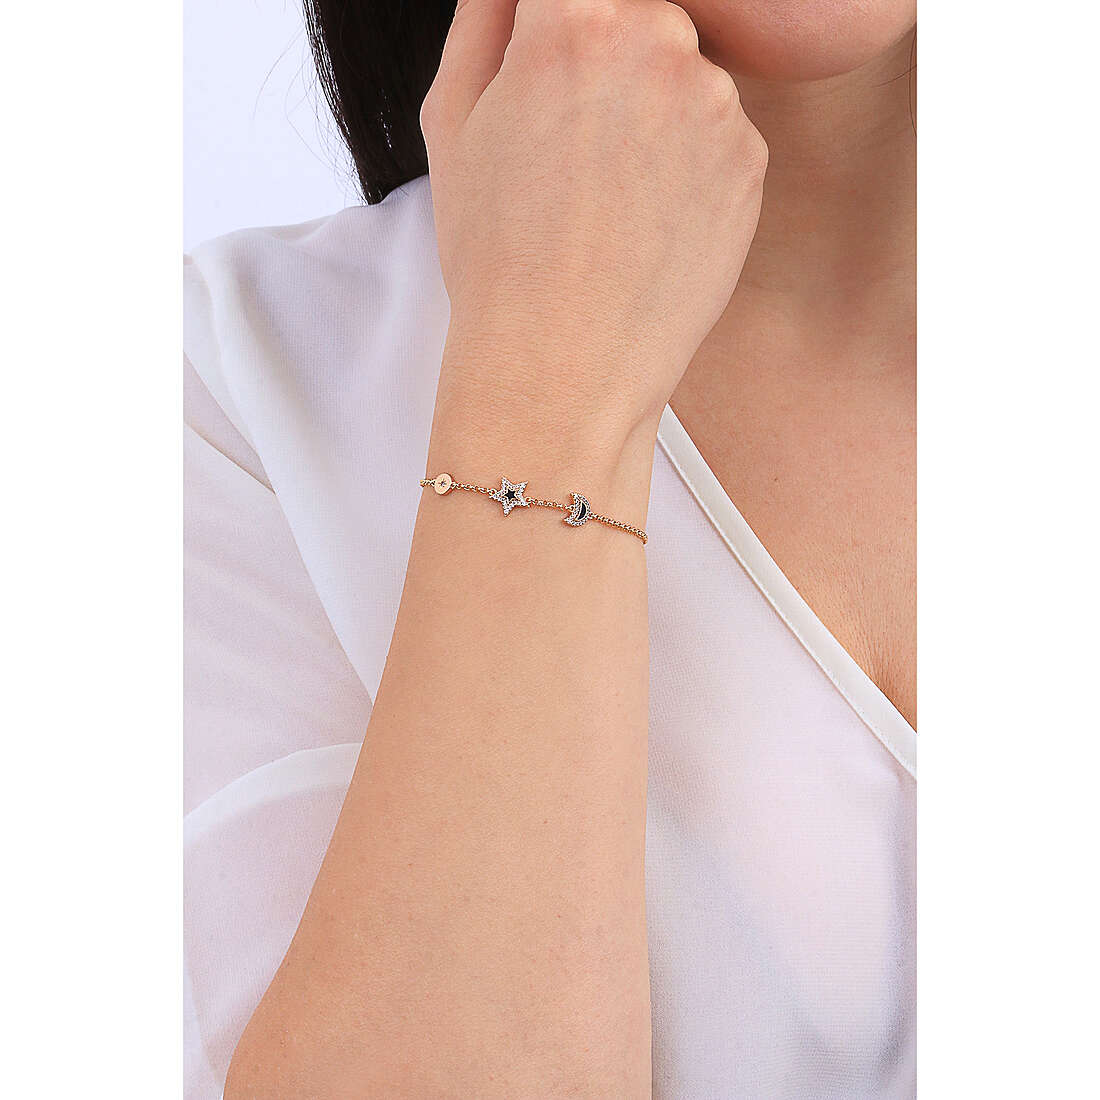 Emporio Armani bracelets woman EGS2960221 wearing